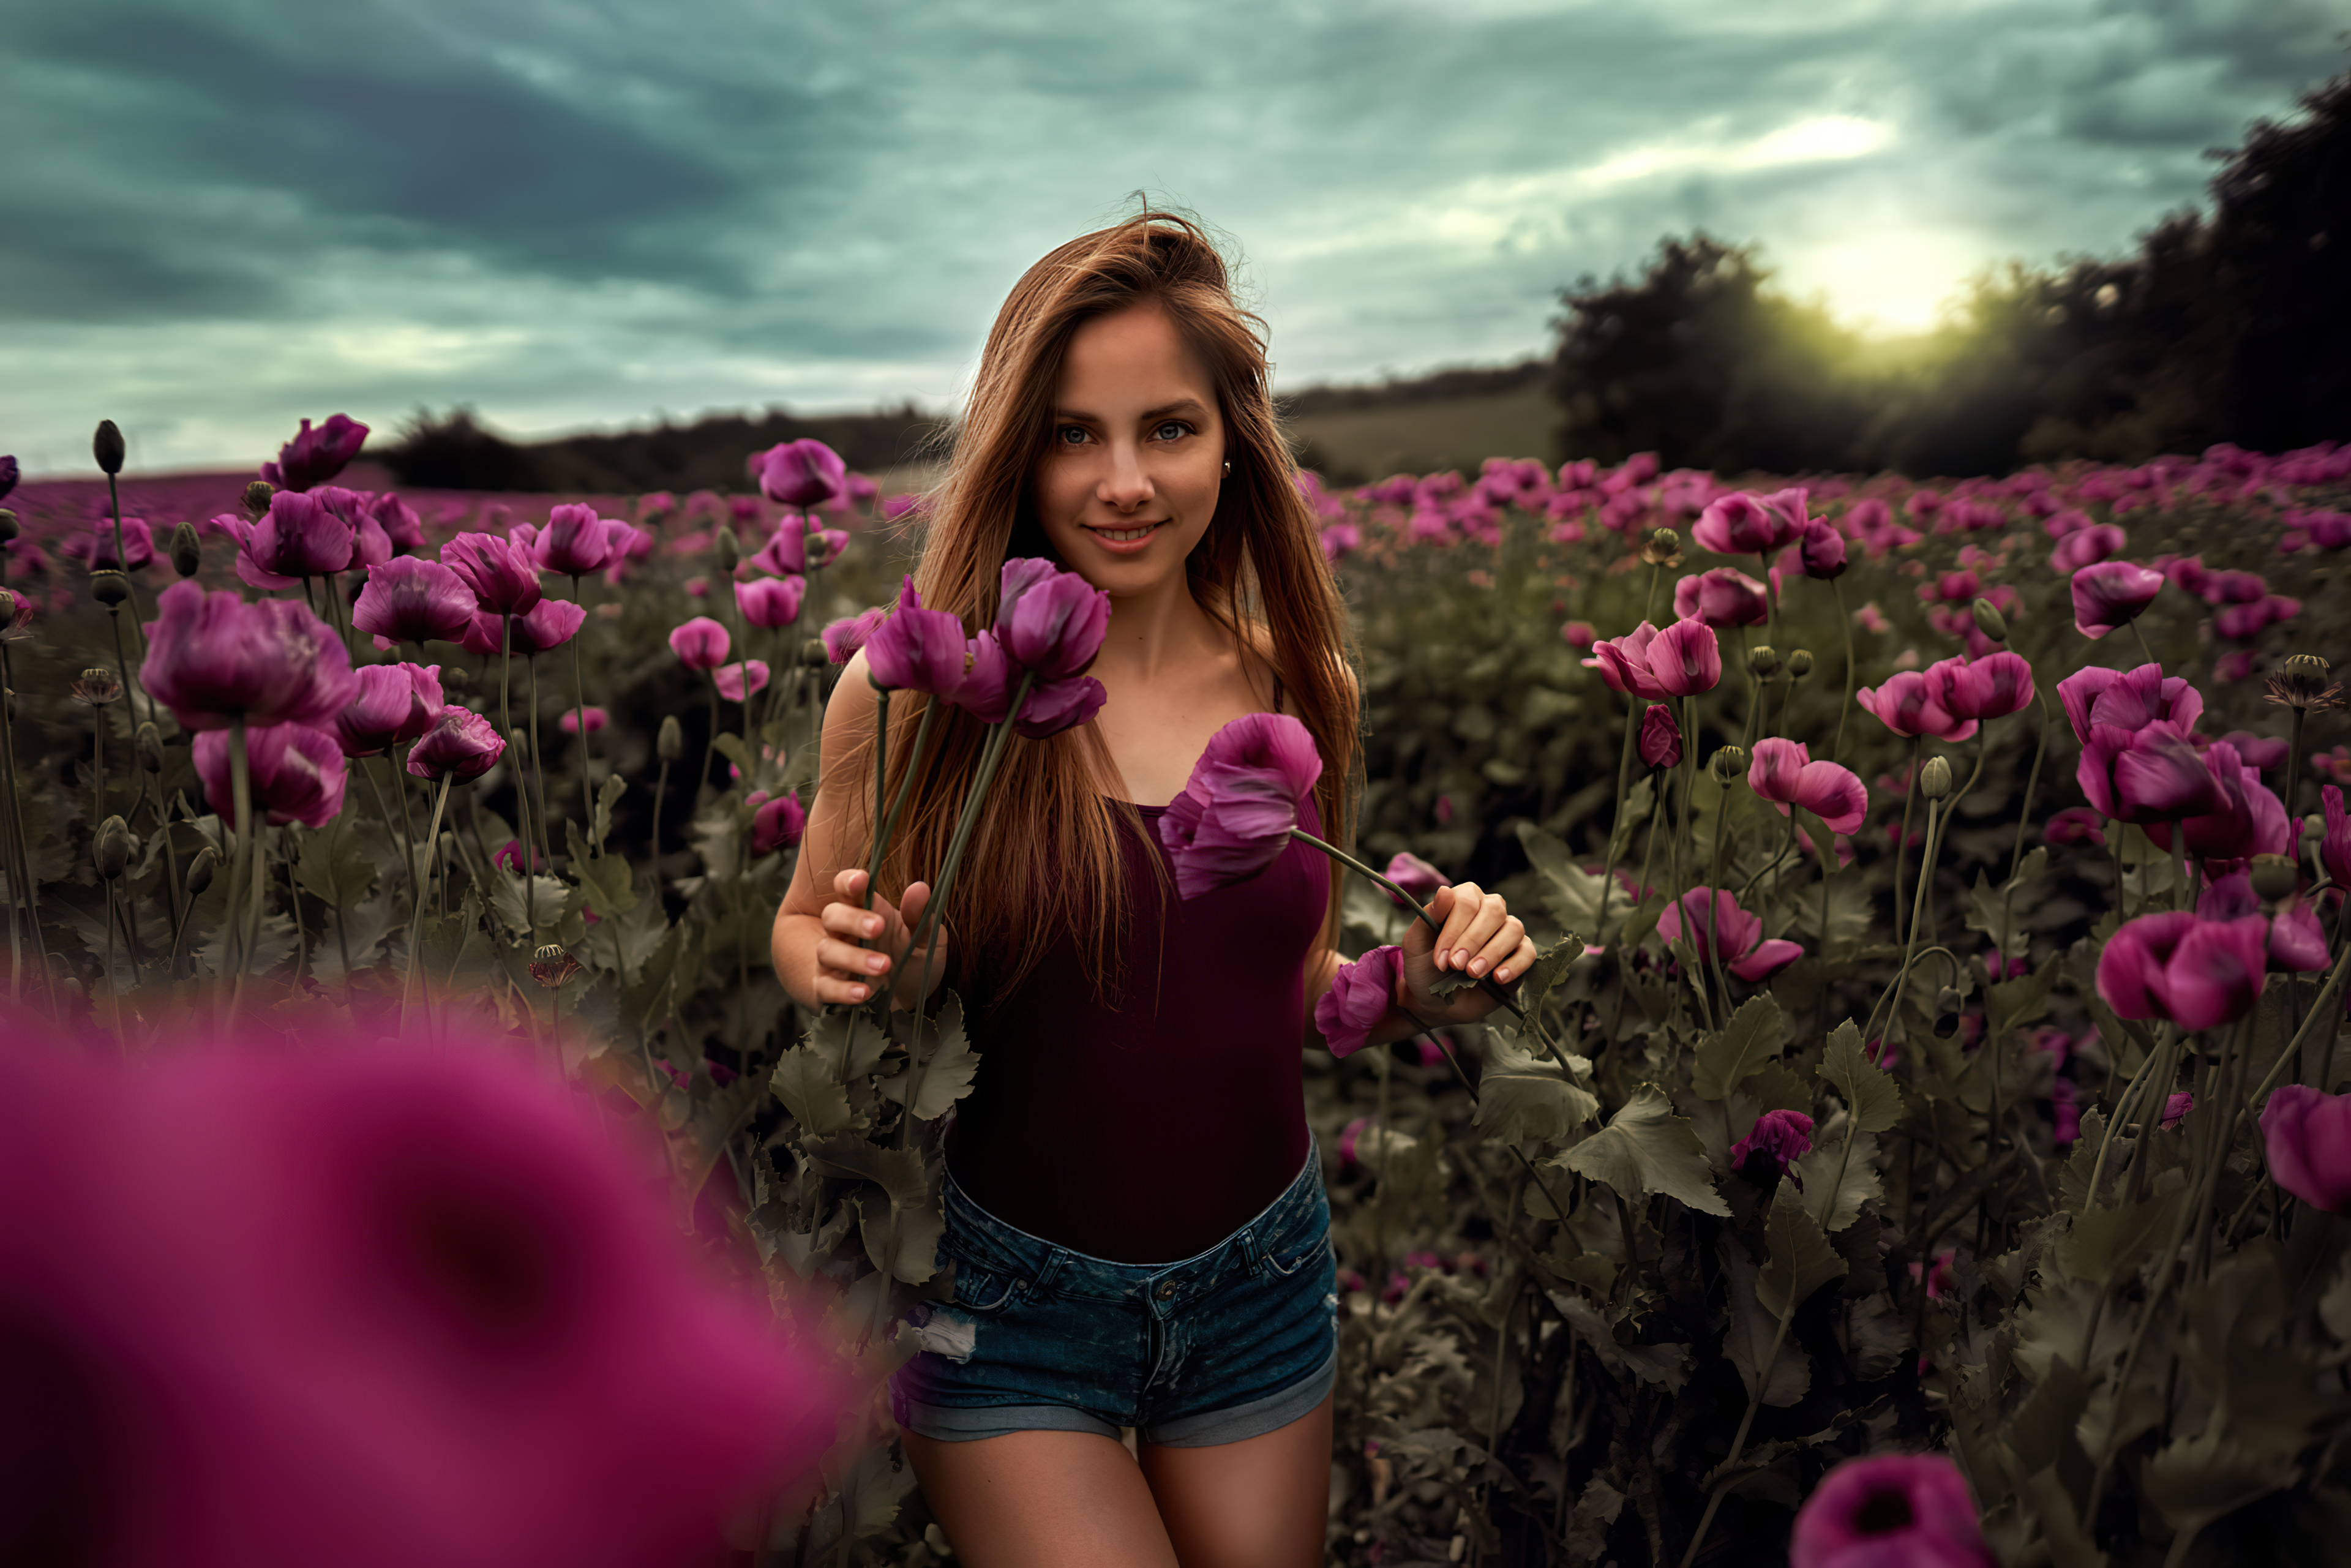 Dark-haired girl walking through a field of purple flowers